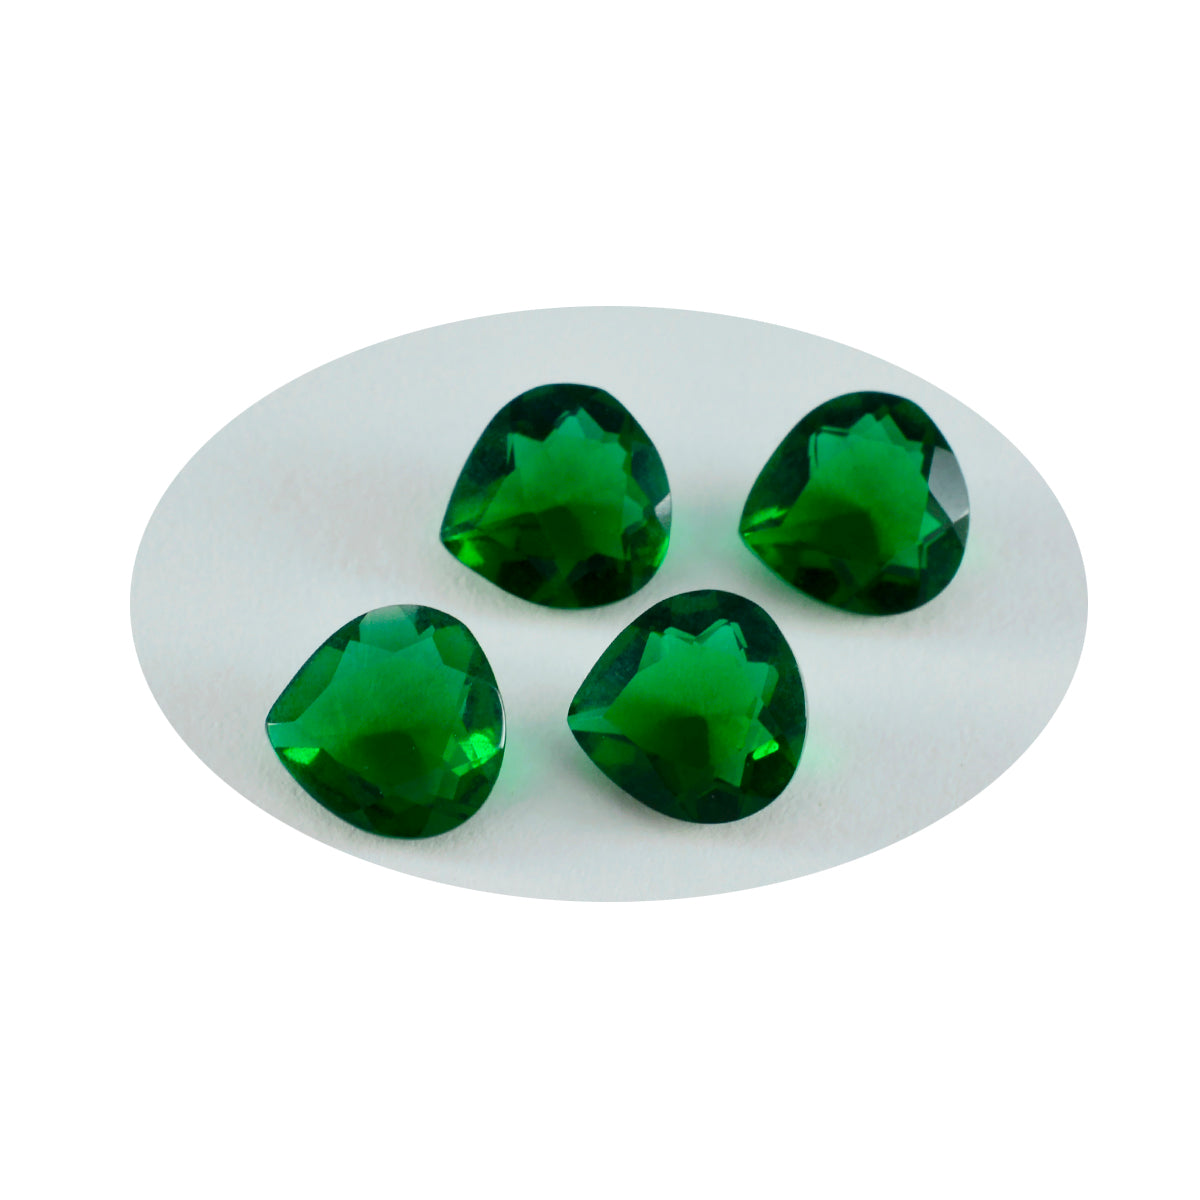 Riyogems 1PC Green Emerald CZ Faceted 6x6 mm Heart Shape astonishing Quality Gem